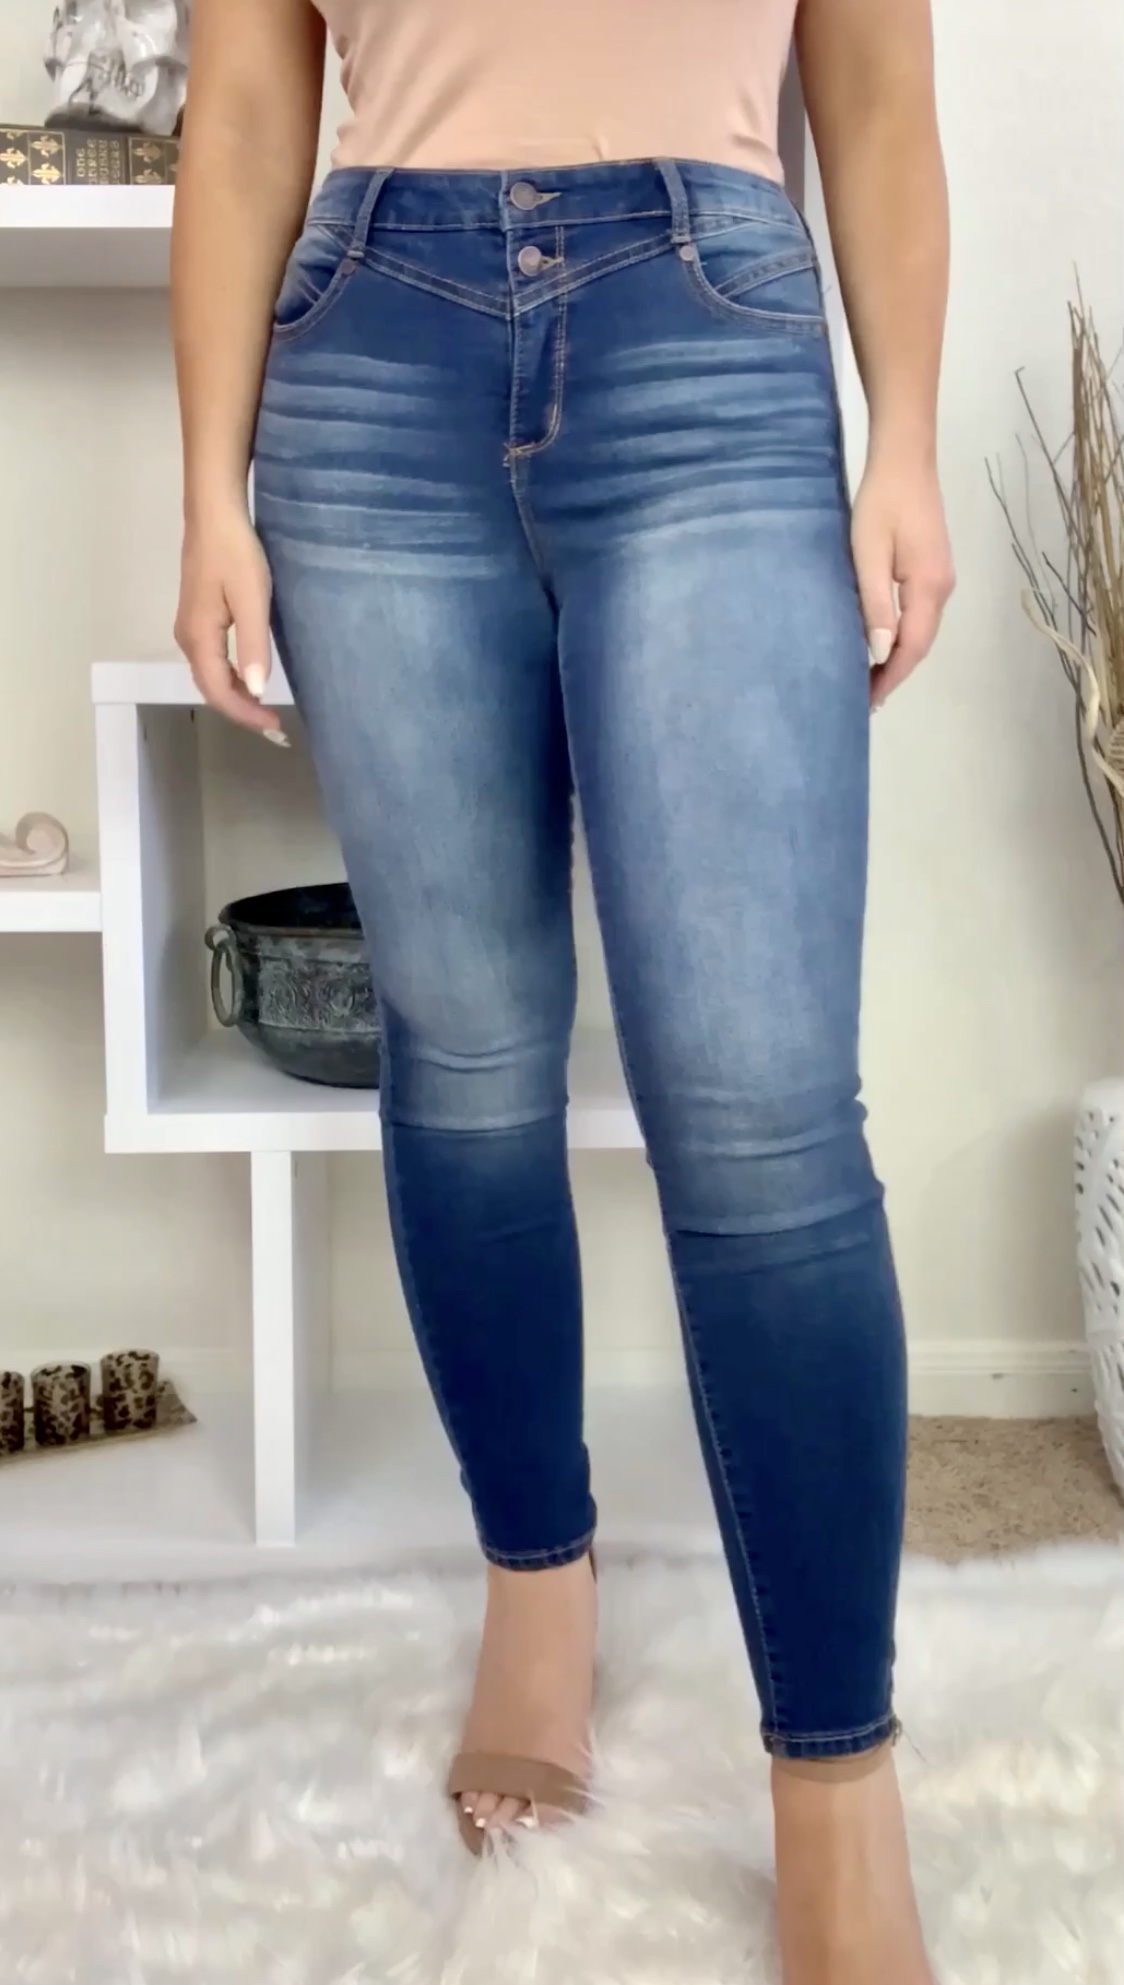 sofia jeans walmart canada - OFF-69% >Free Delivery